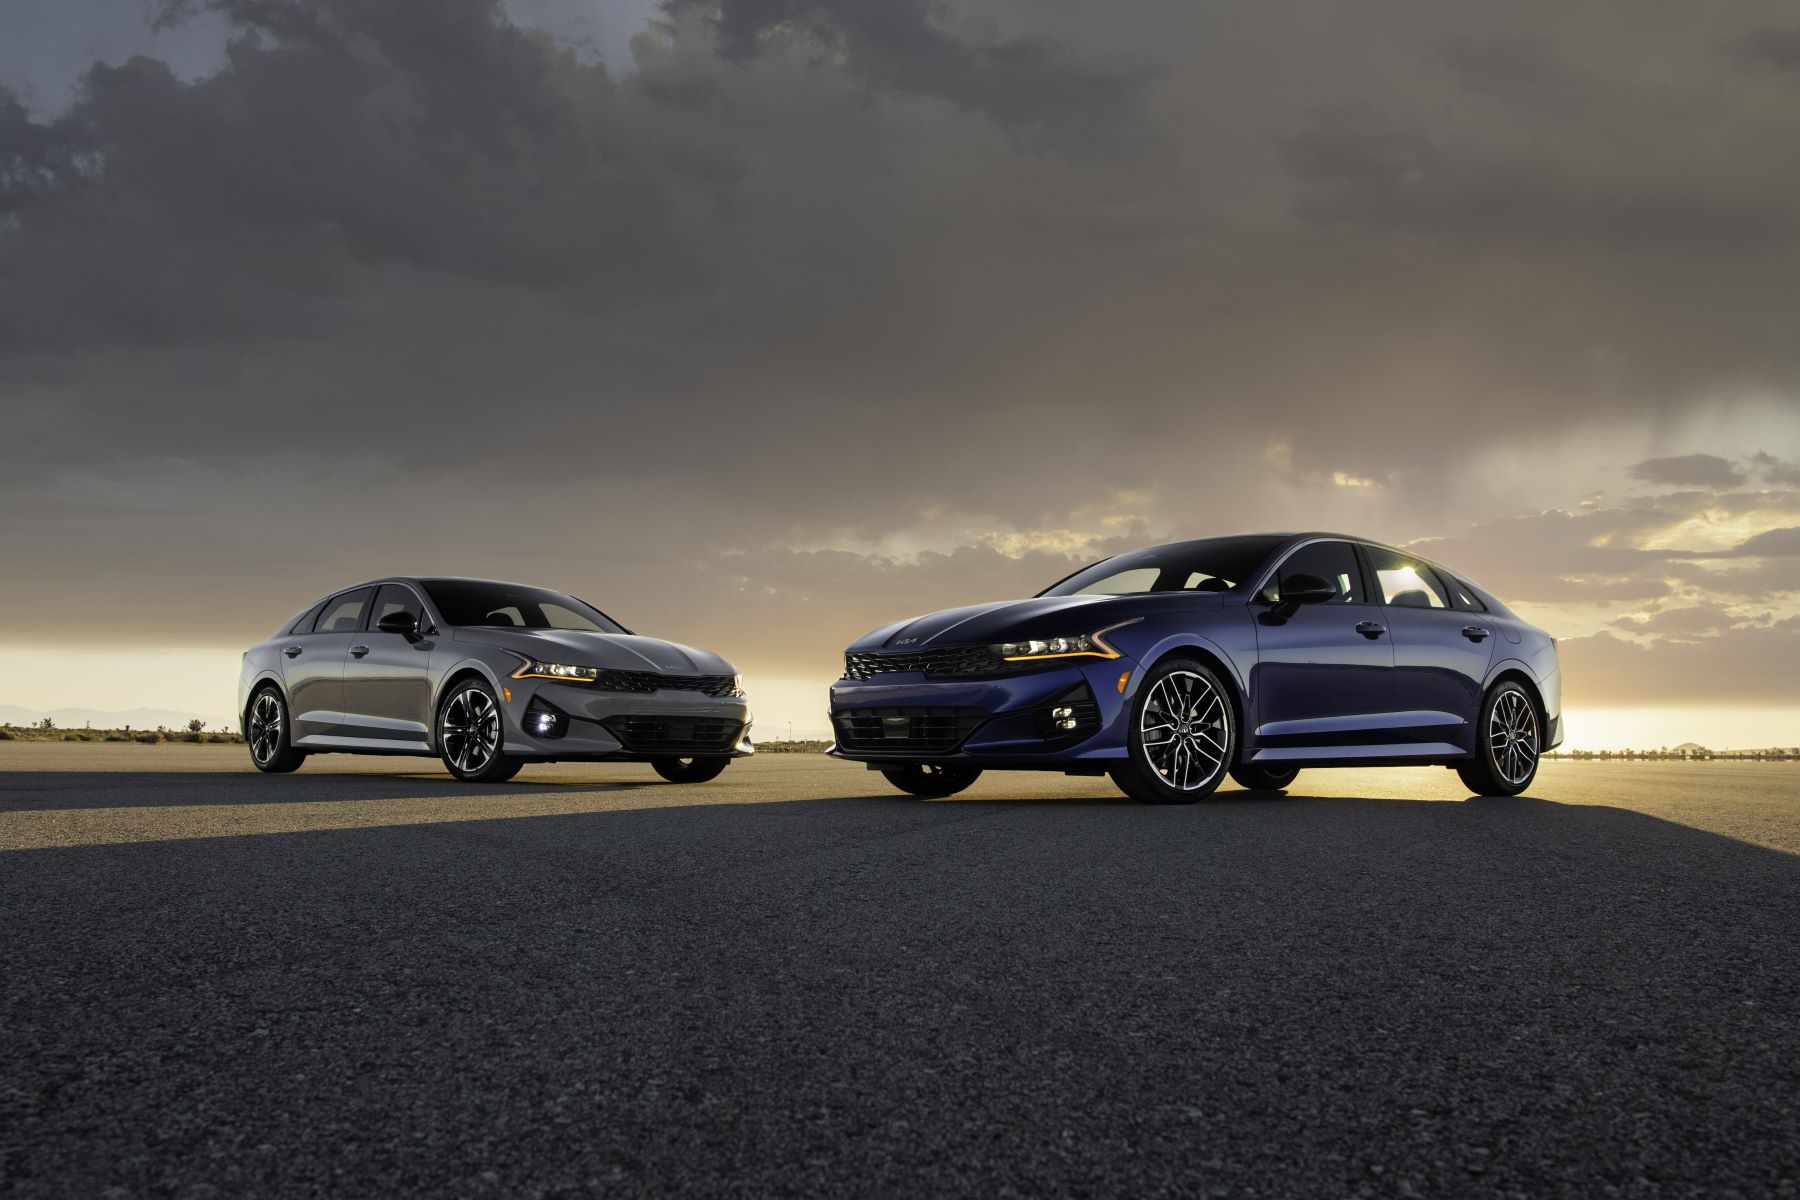 Gray and blue 2023 Kia K5 midsize sedan models pictured on an asphalt lot at sunset